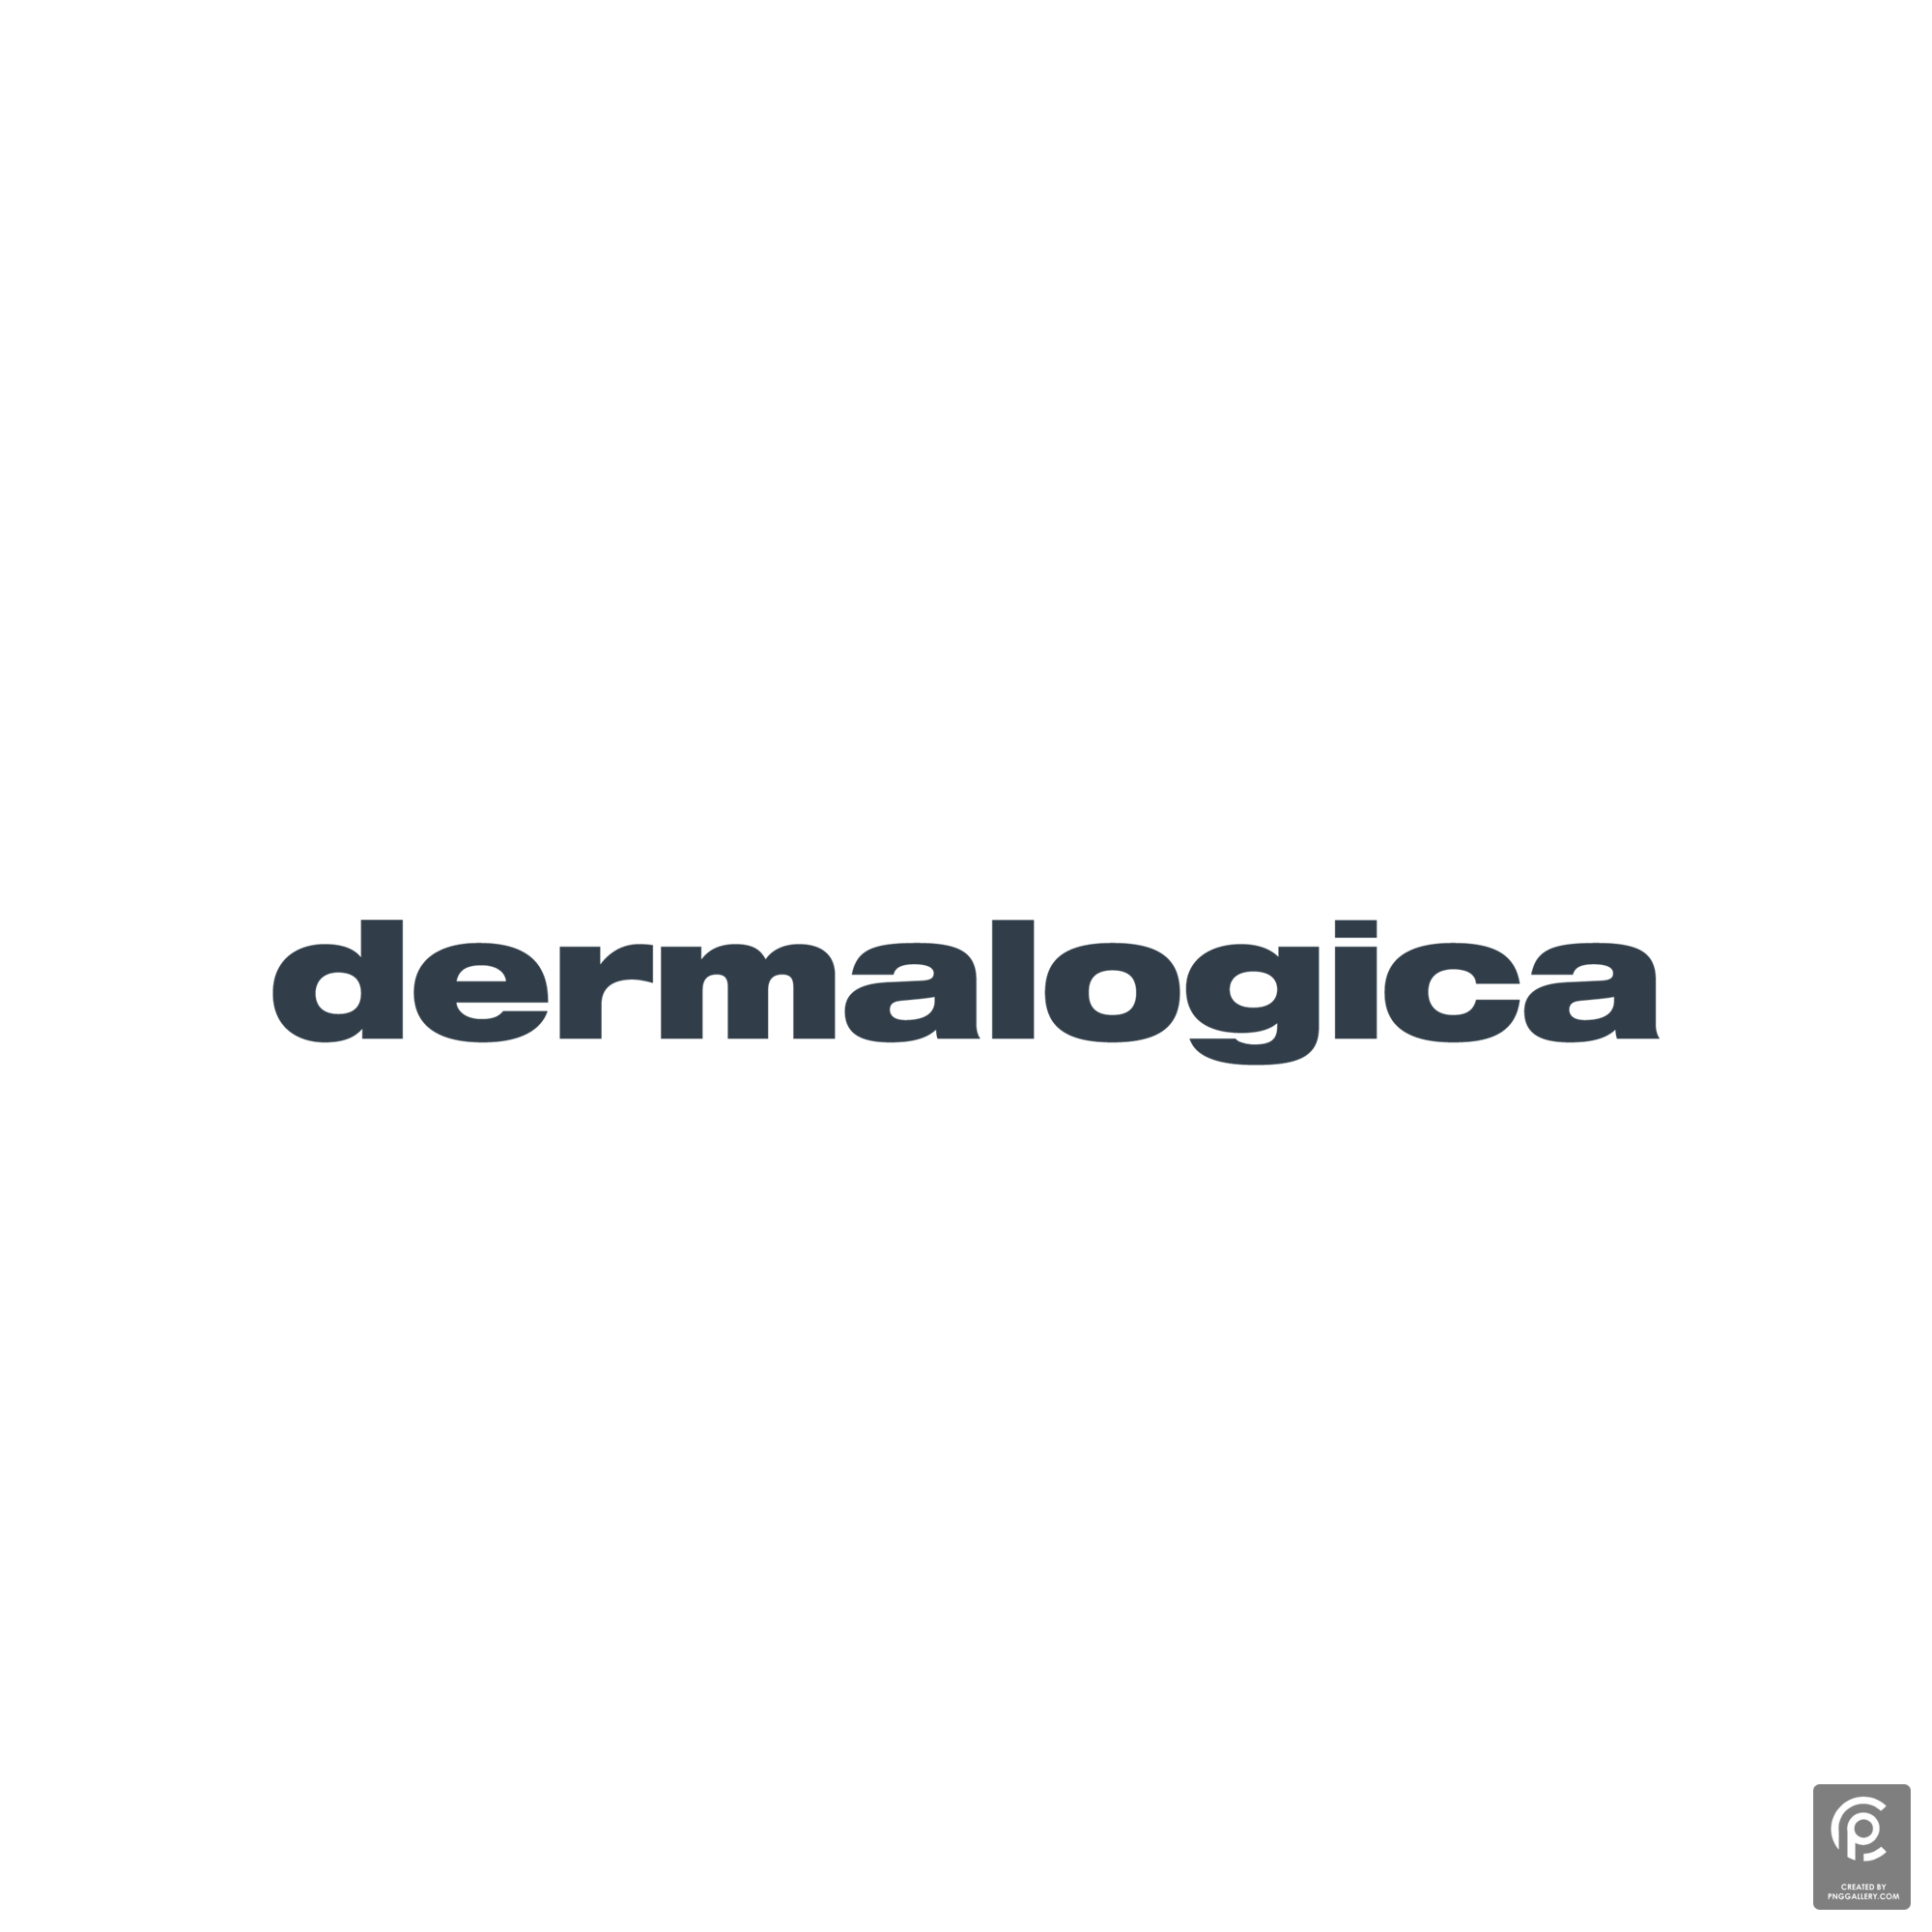 Dermalogica Logo Transparent Picture